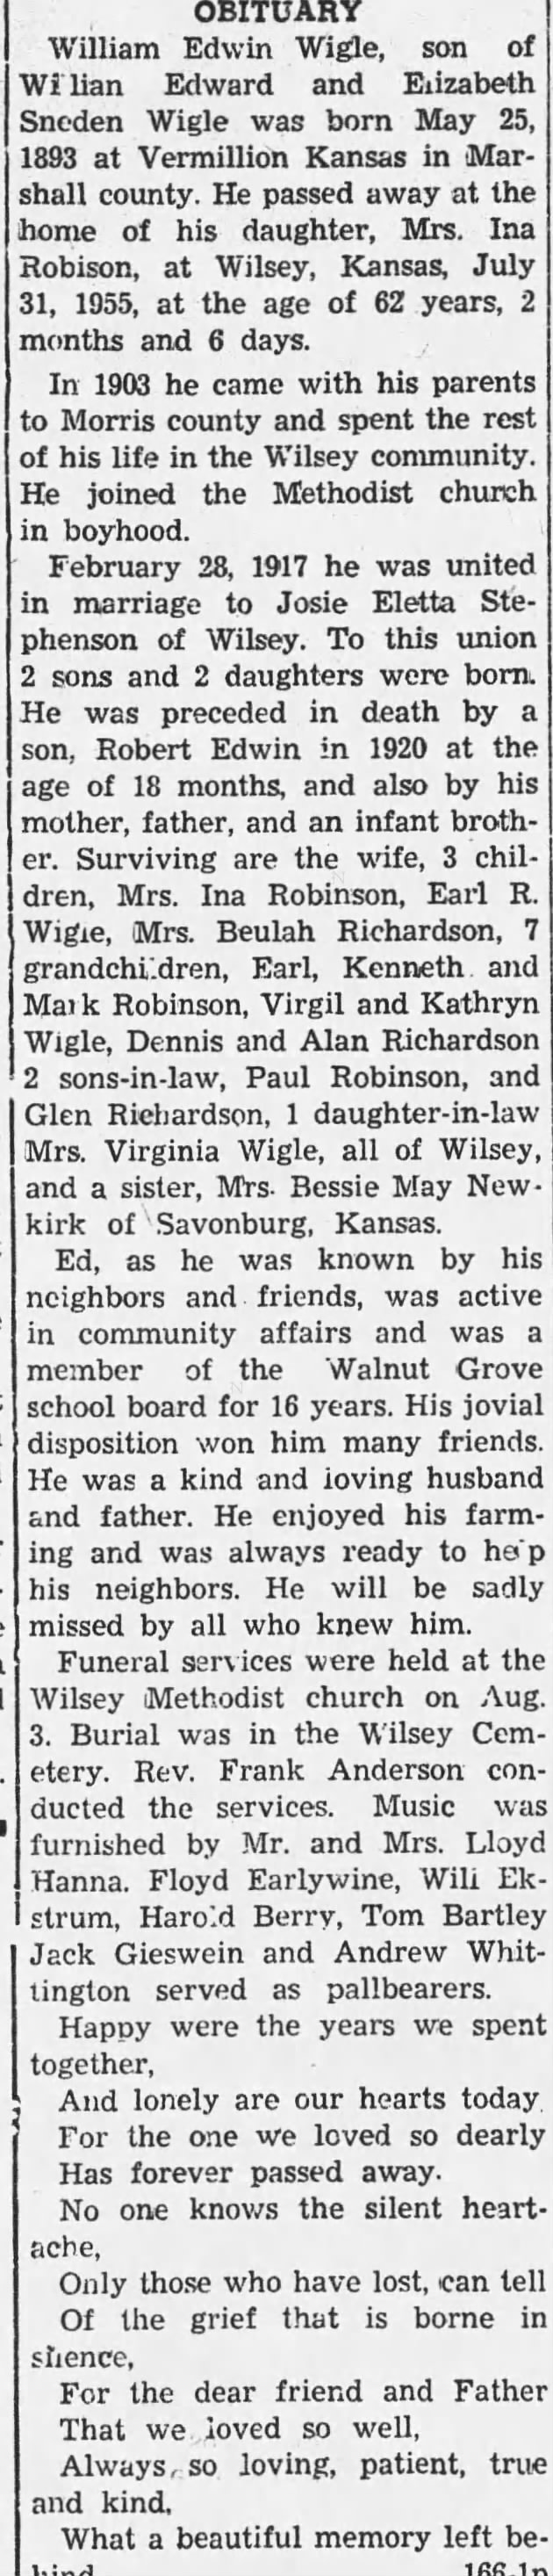 Obituary: William Edwin Wigle, 1893-1955 (Aged 62)